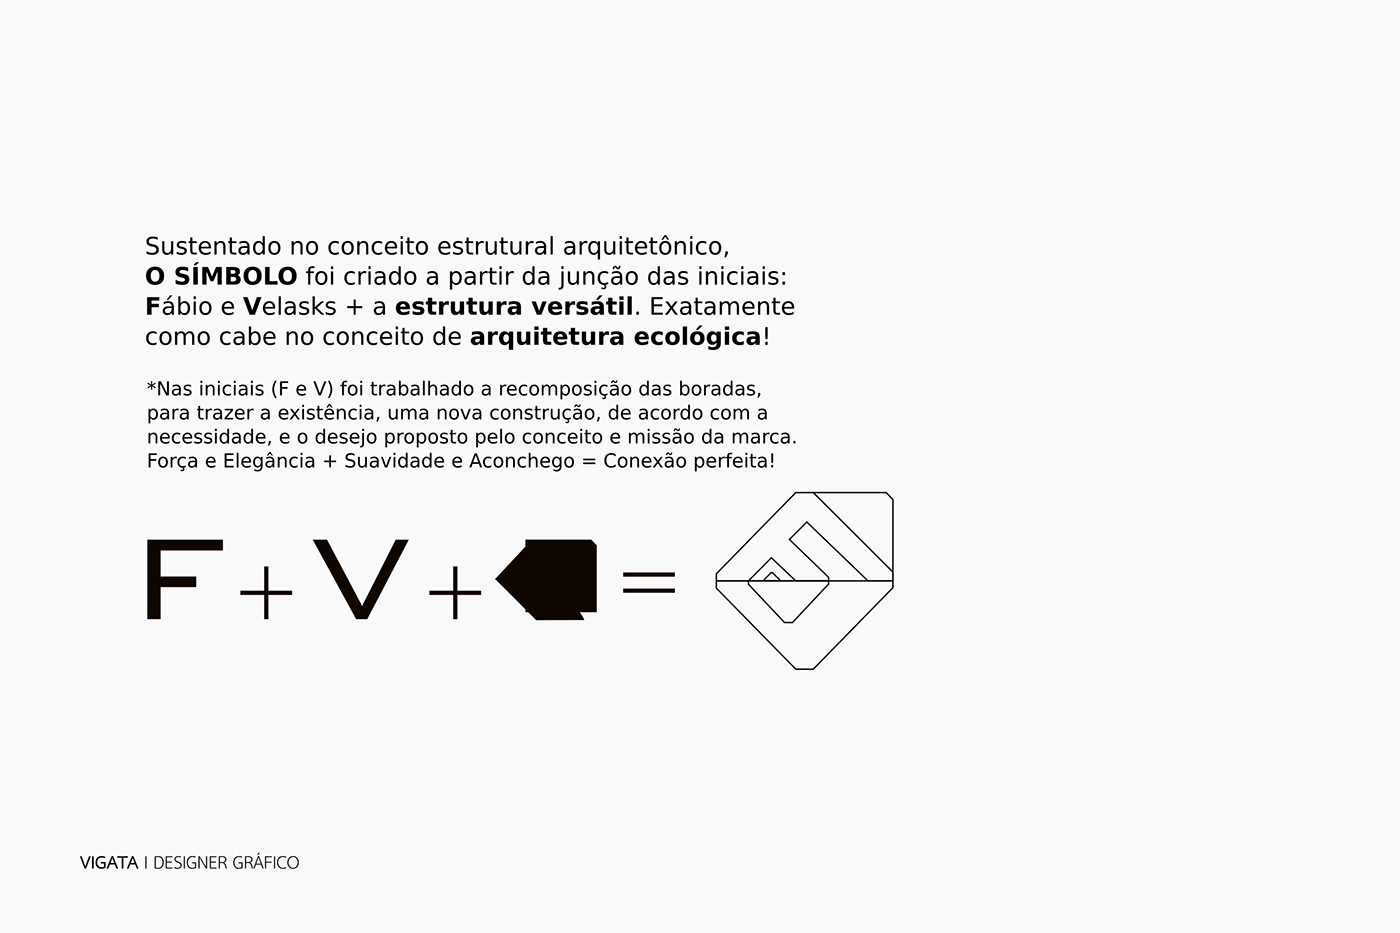 designgrafico designer gráfico graphicdesign designer Logotipo marca identidade visual ARQUITETURA organic ecological